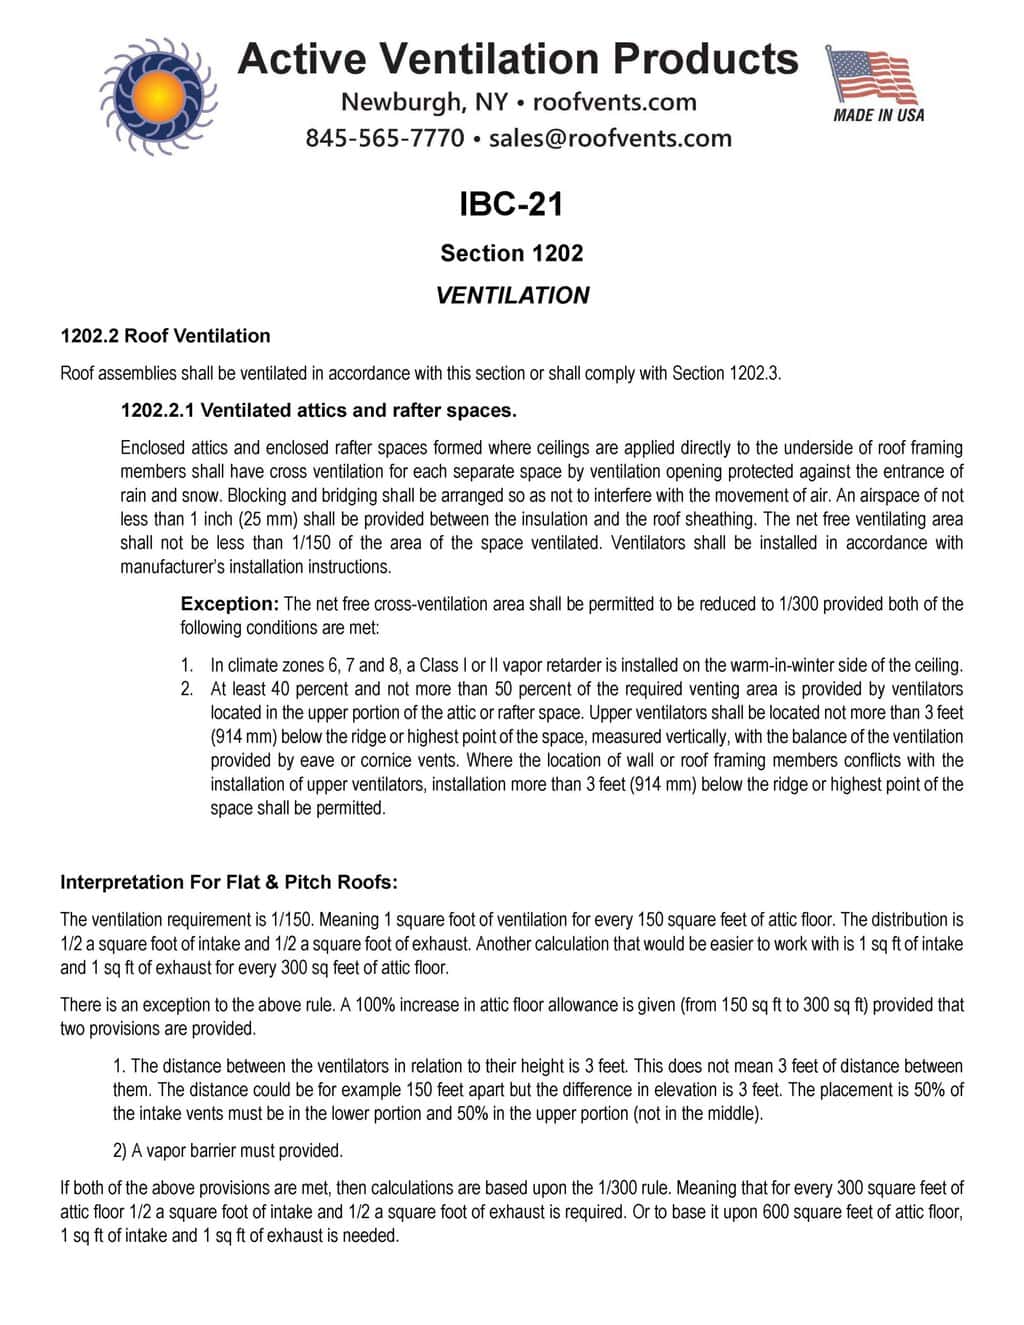 IBC-21_Section1202_Ventilation Code